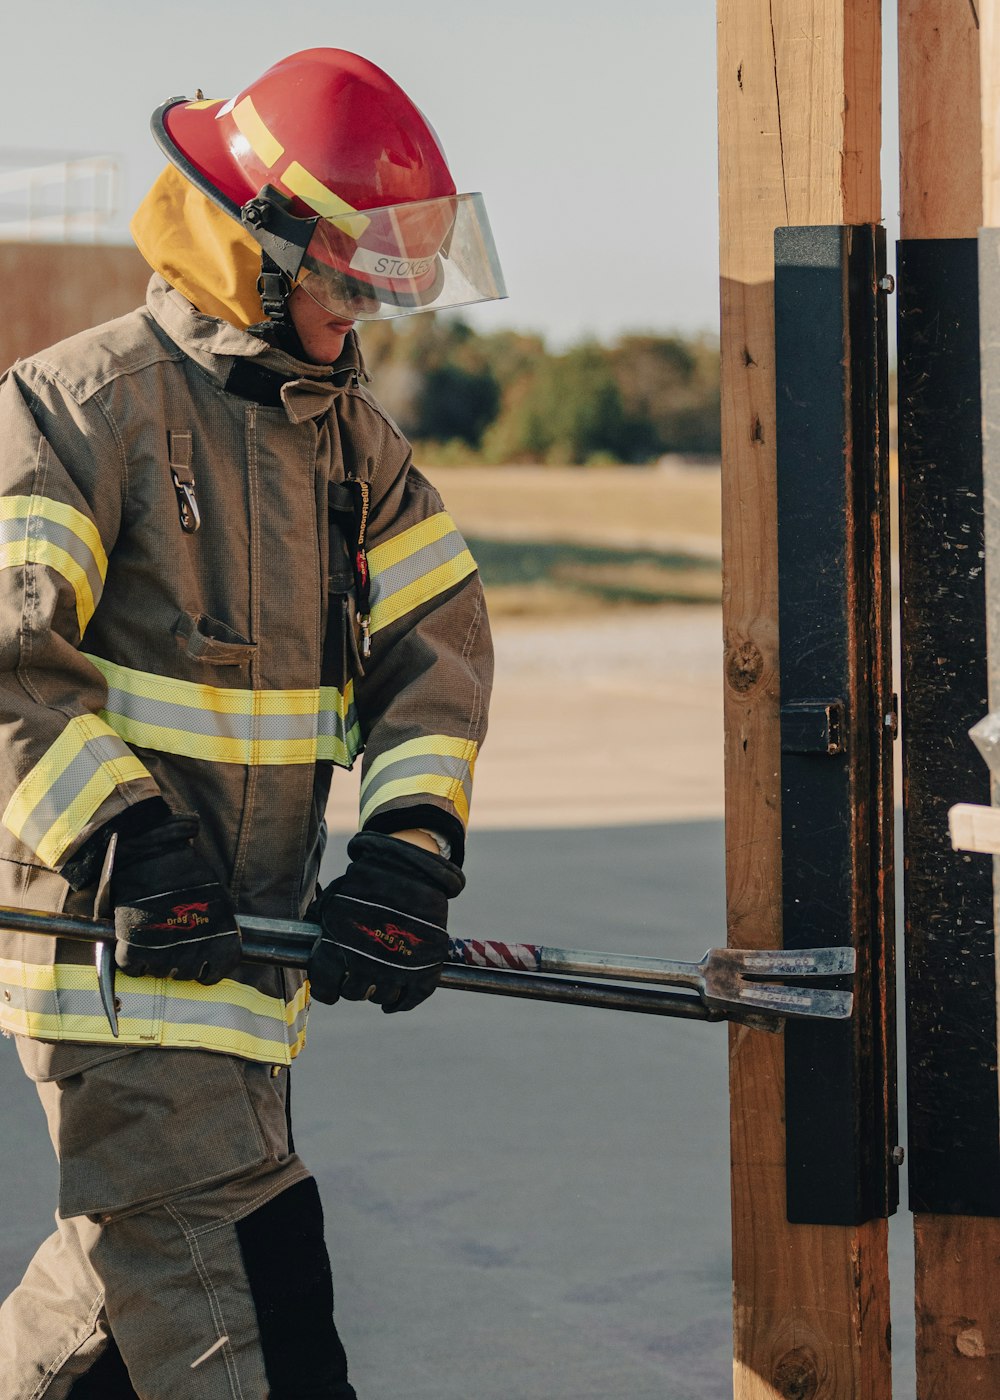 a fireman in a fire suit holding a fire hose